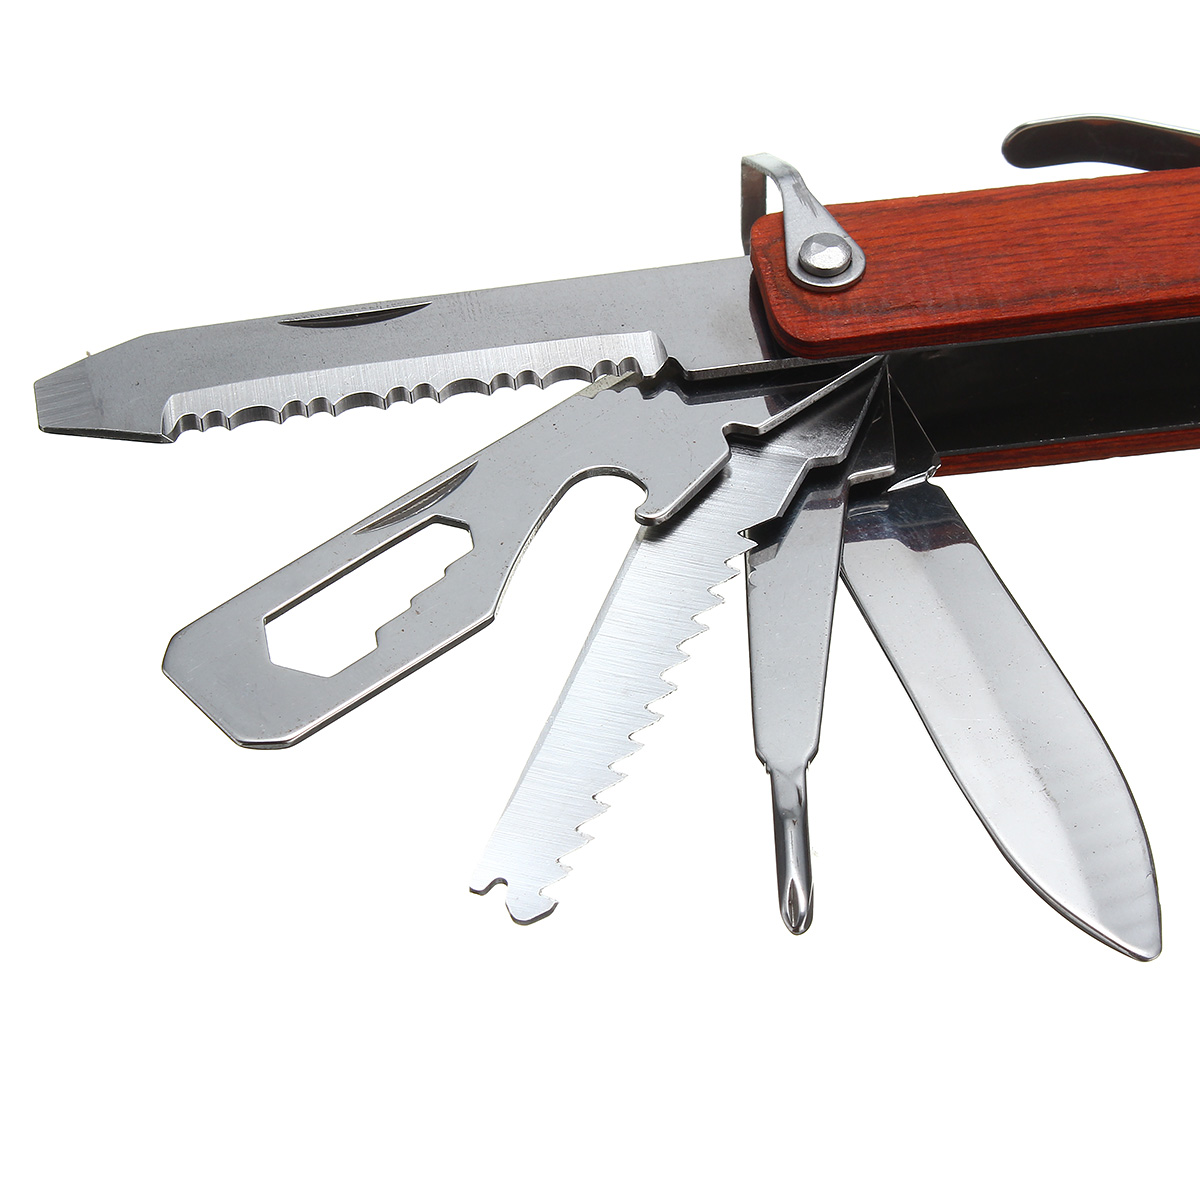 Multifunction-Hammer-Axe-Opener-Screwdriver-Pliers-Tool-Kit-Emergency-Survival-Hatchet-EDC-Tools-1306709-4